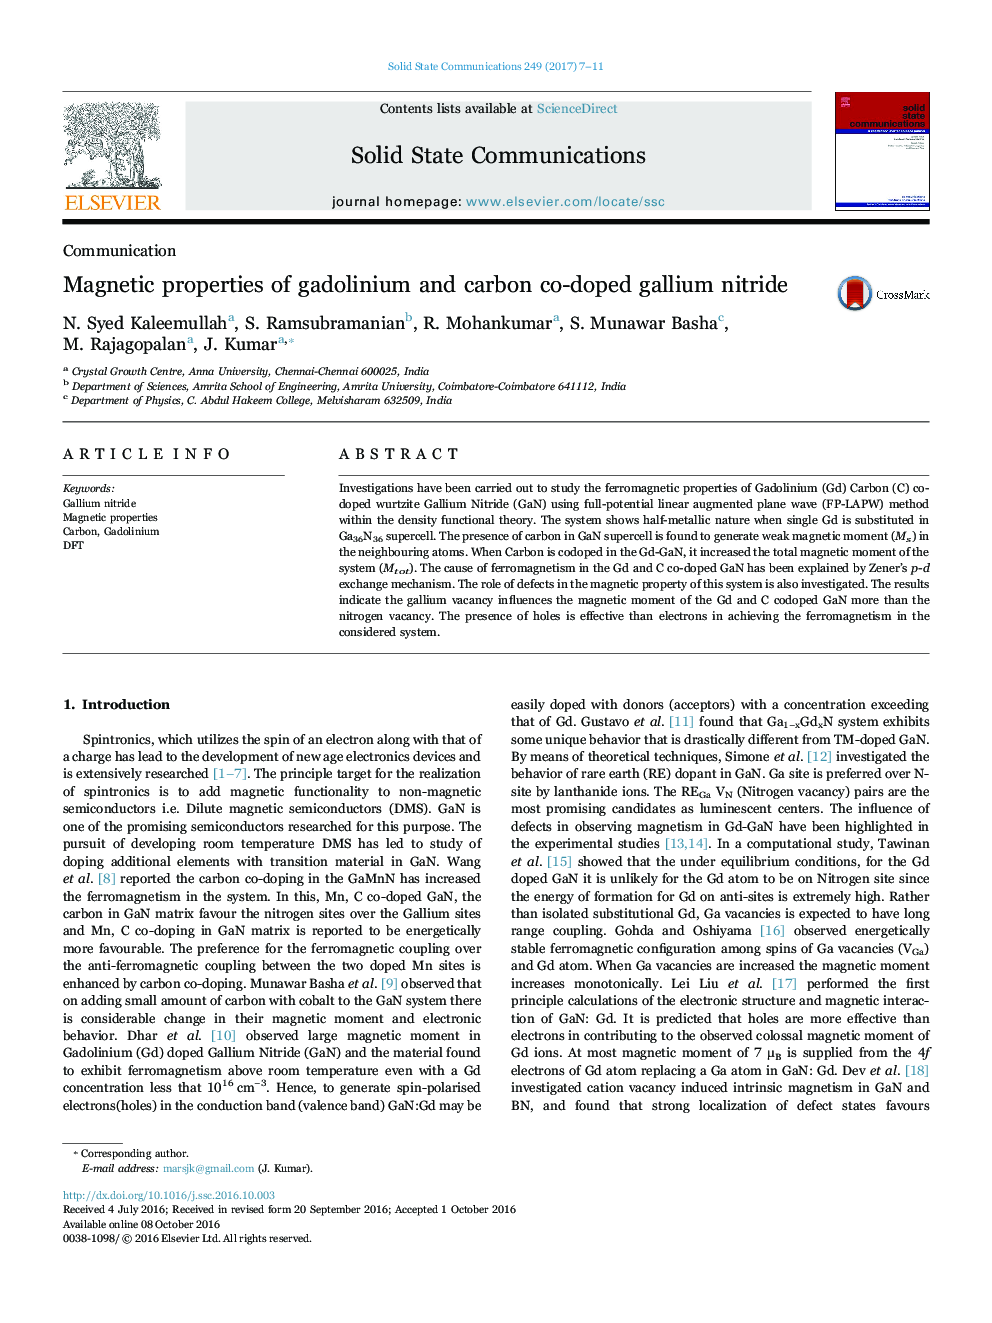 Magnetic properties of gadolinium and carbon co-doped gallium nitride